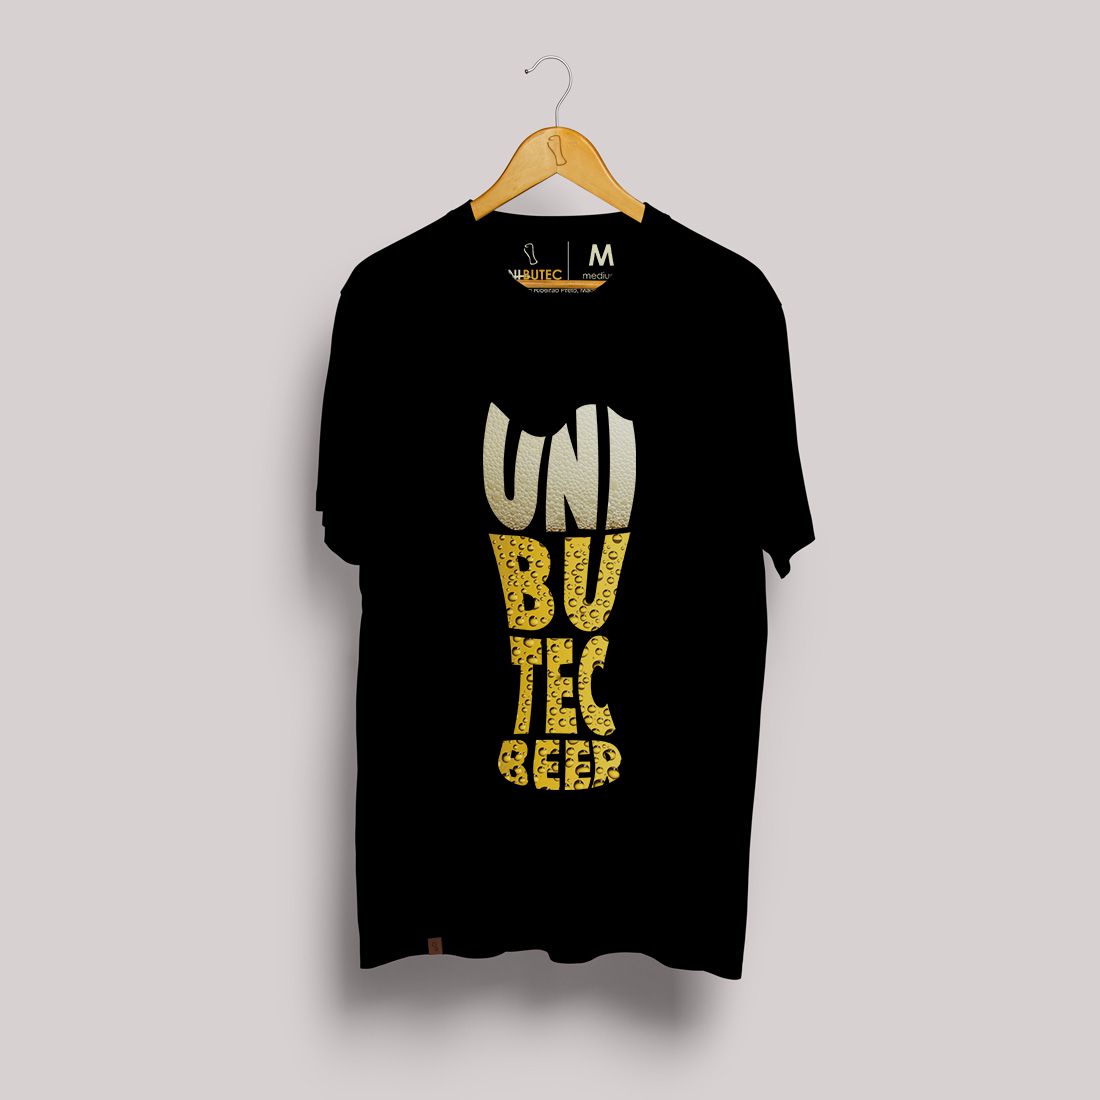 Camiseta Hops Unibutec Beer T-Shirt Tulipa - Unibutec Clothing ® • A Marca  Número 1 do Butequeiro!